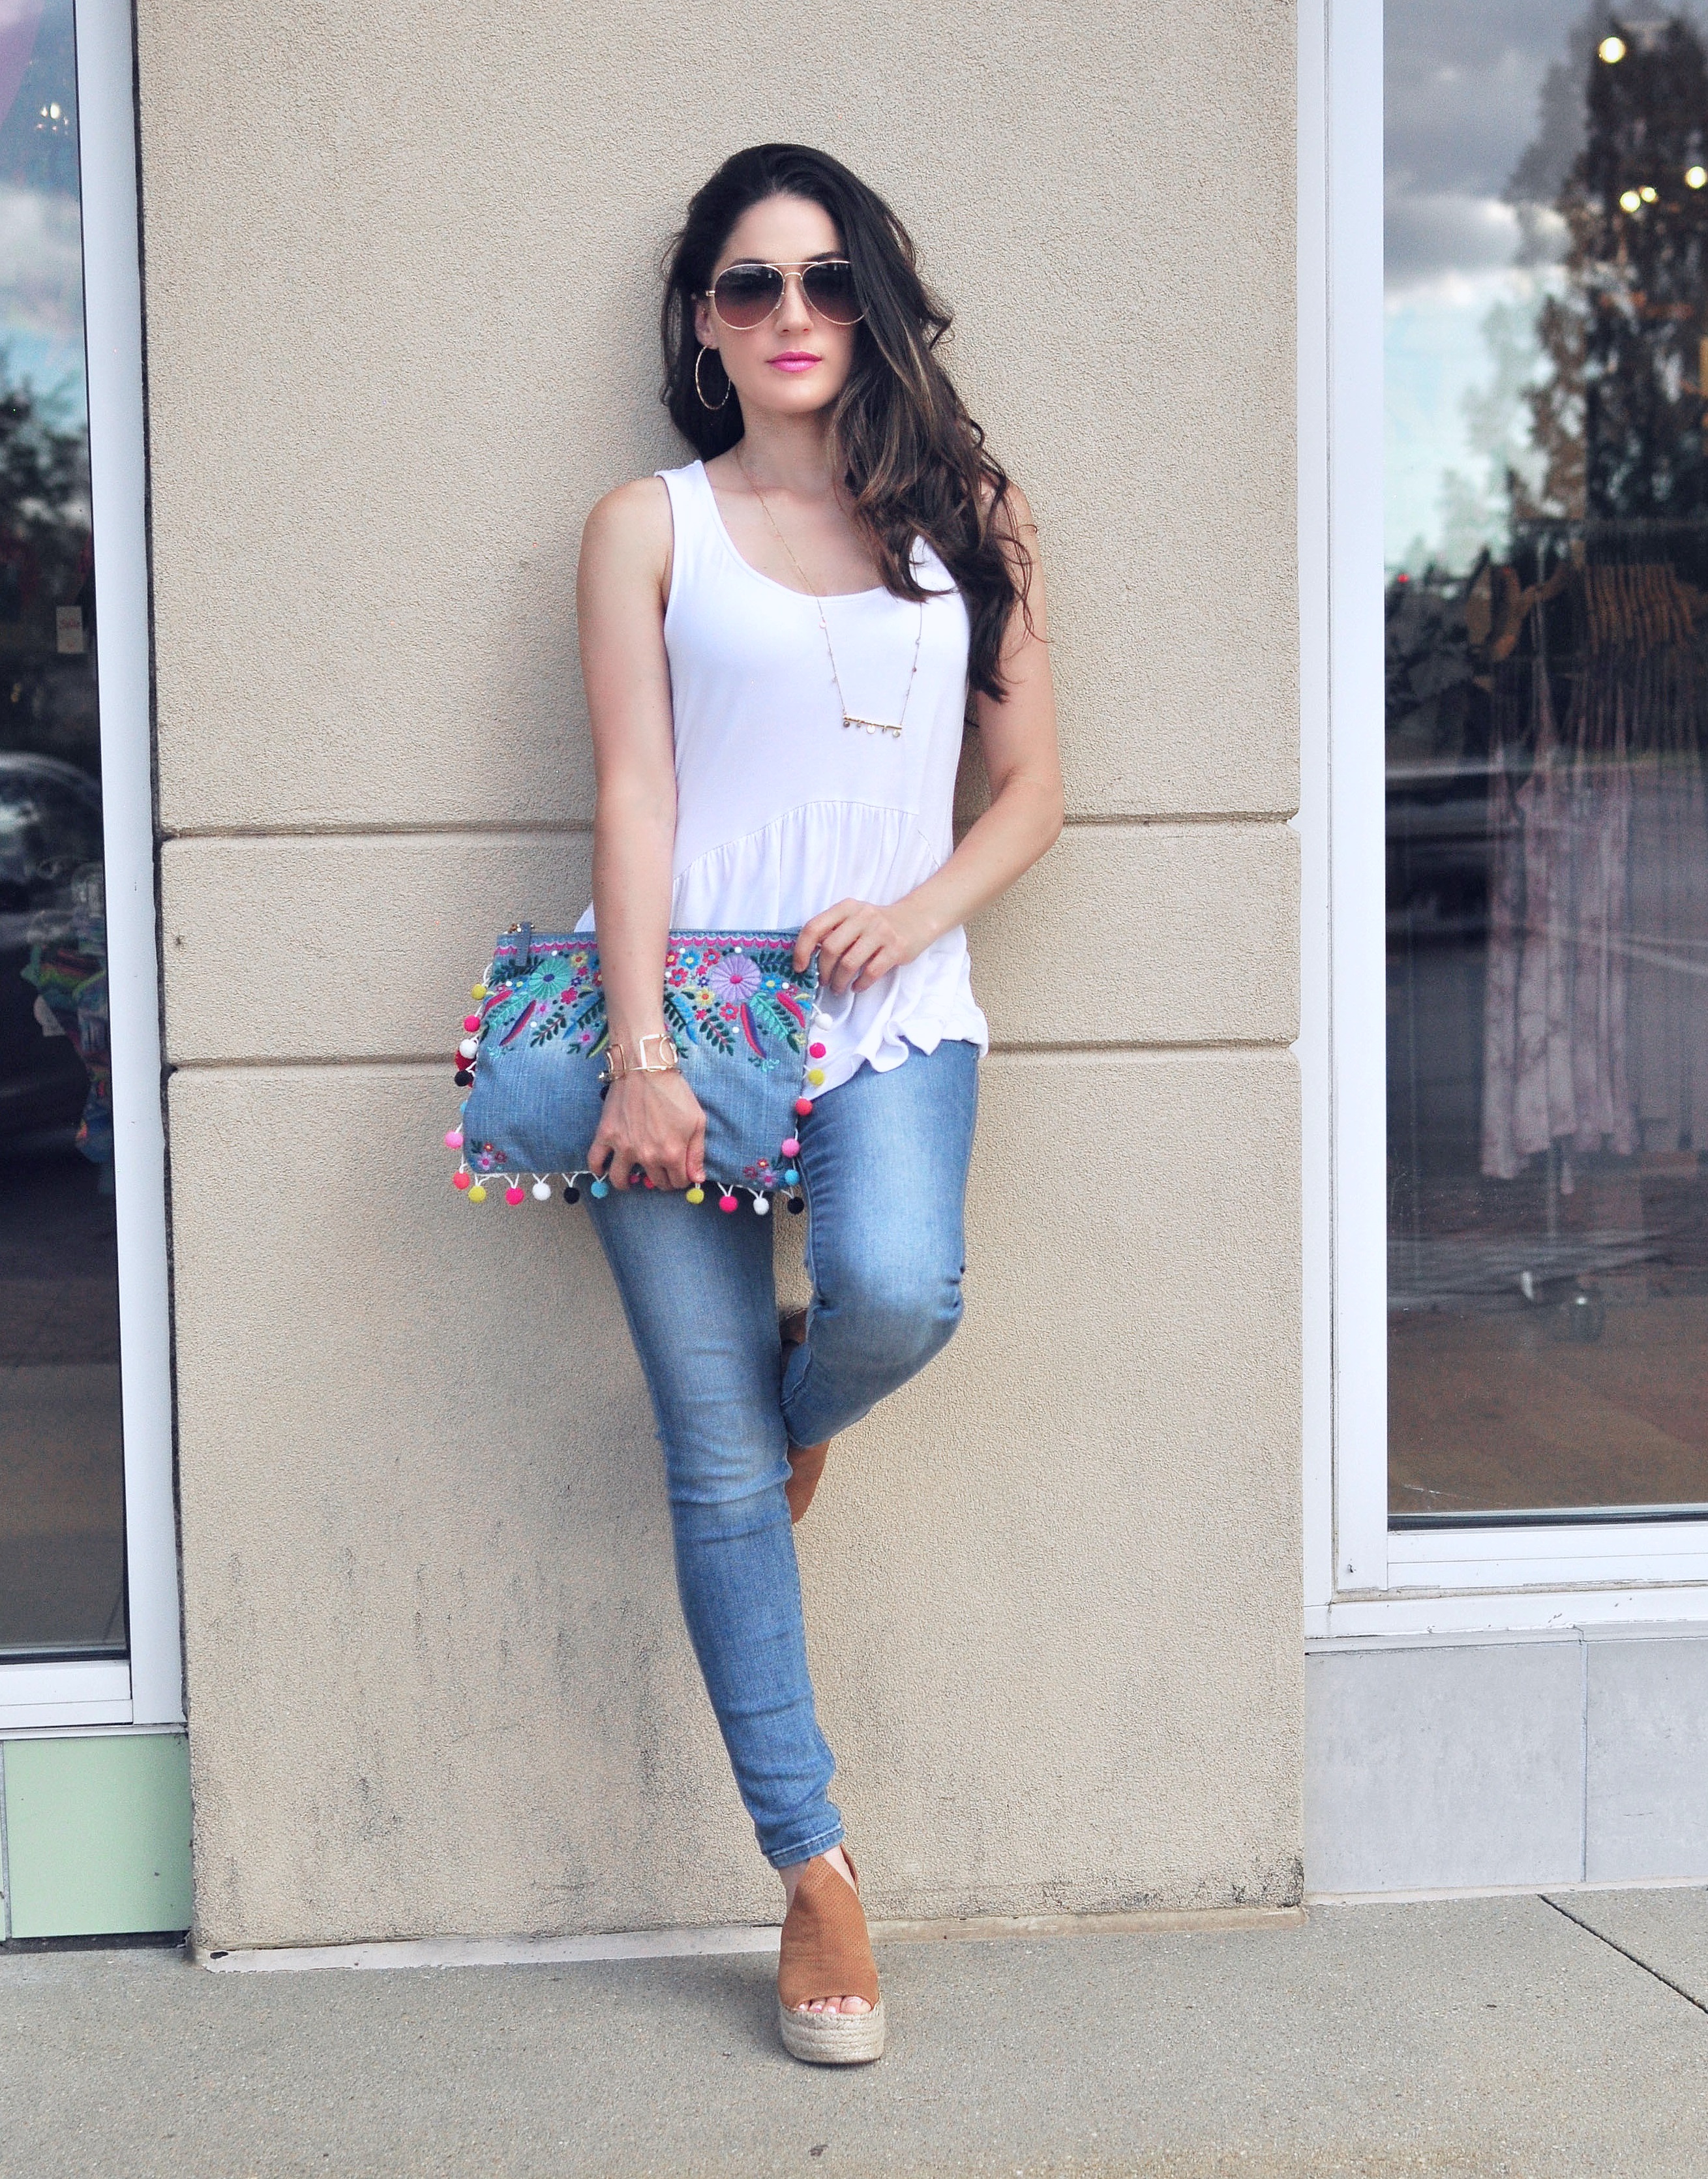 White Tee & Jeans - Style Blogger Erica Valentin